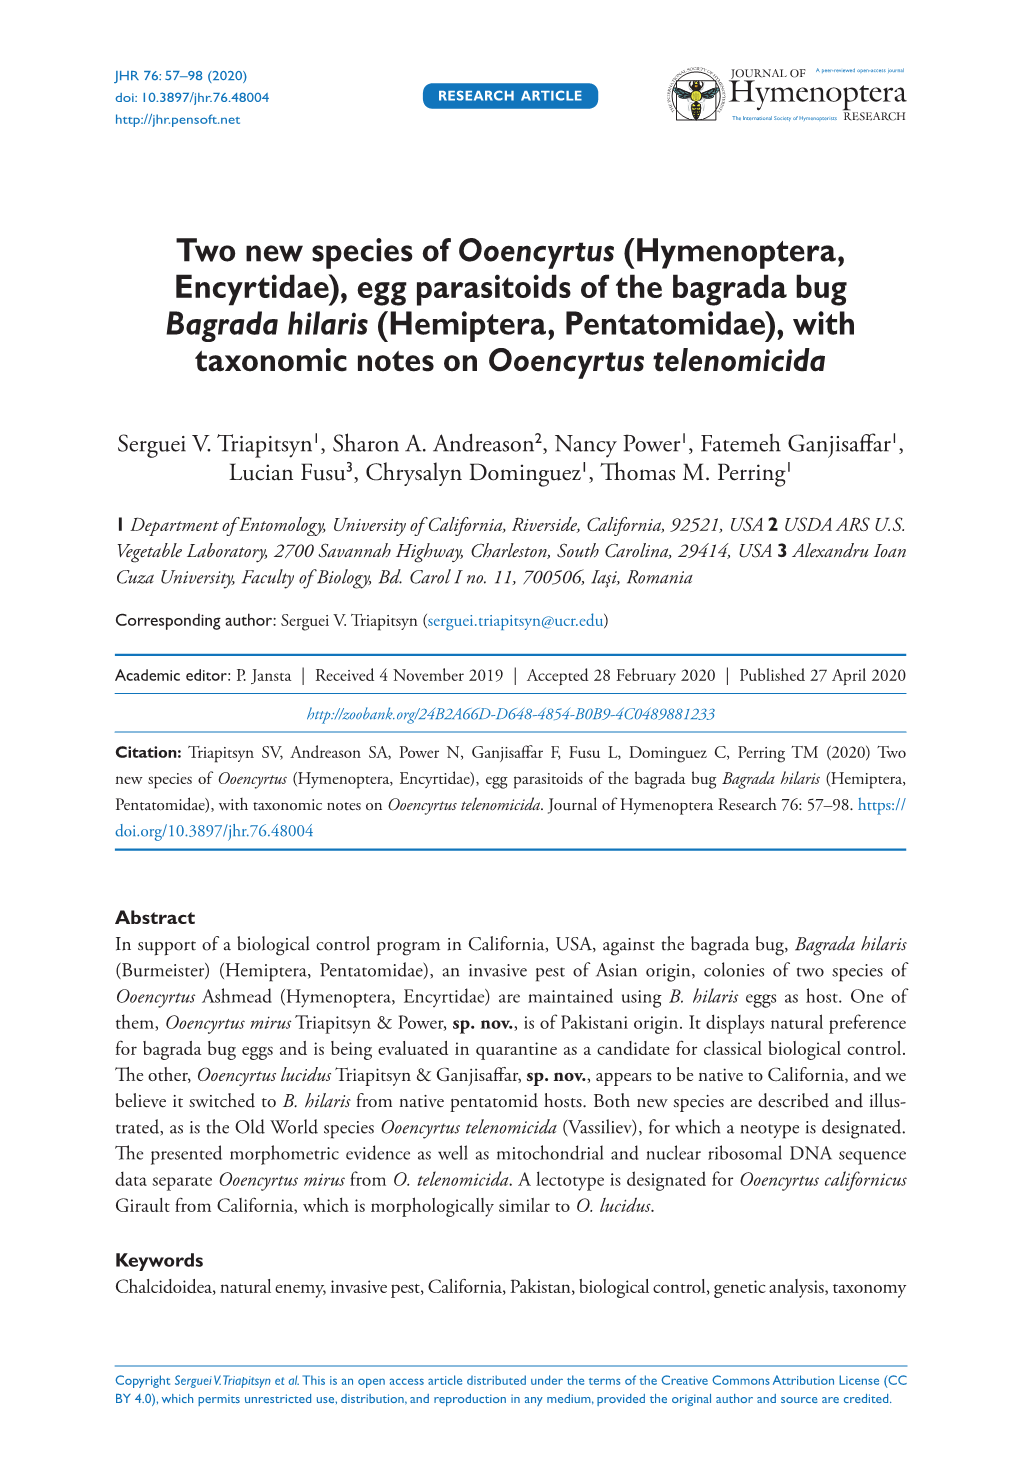 Egg Parasitoids of the Bagrada Bug Bagrada Hilaris (Hemiptera, Pentatomidae), with Taxonomic Notes on Ooencyrtus Telenomicida